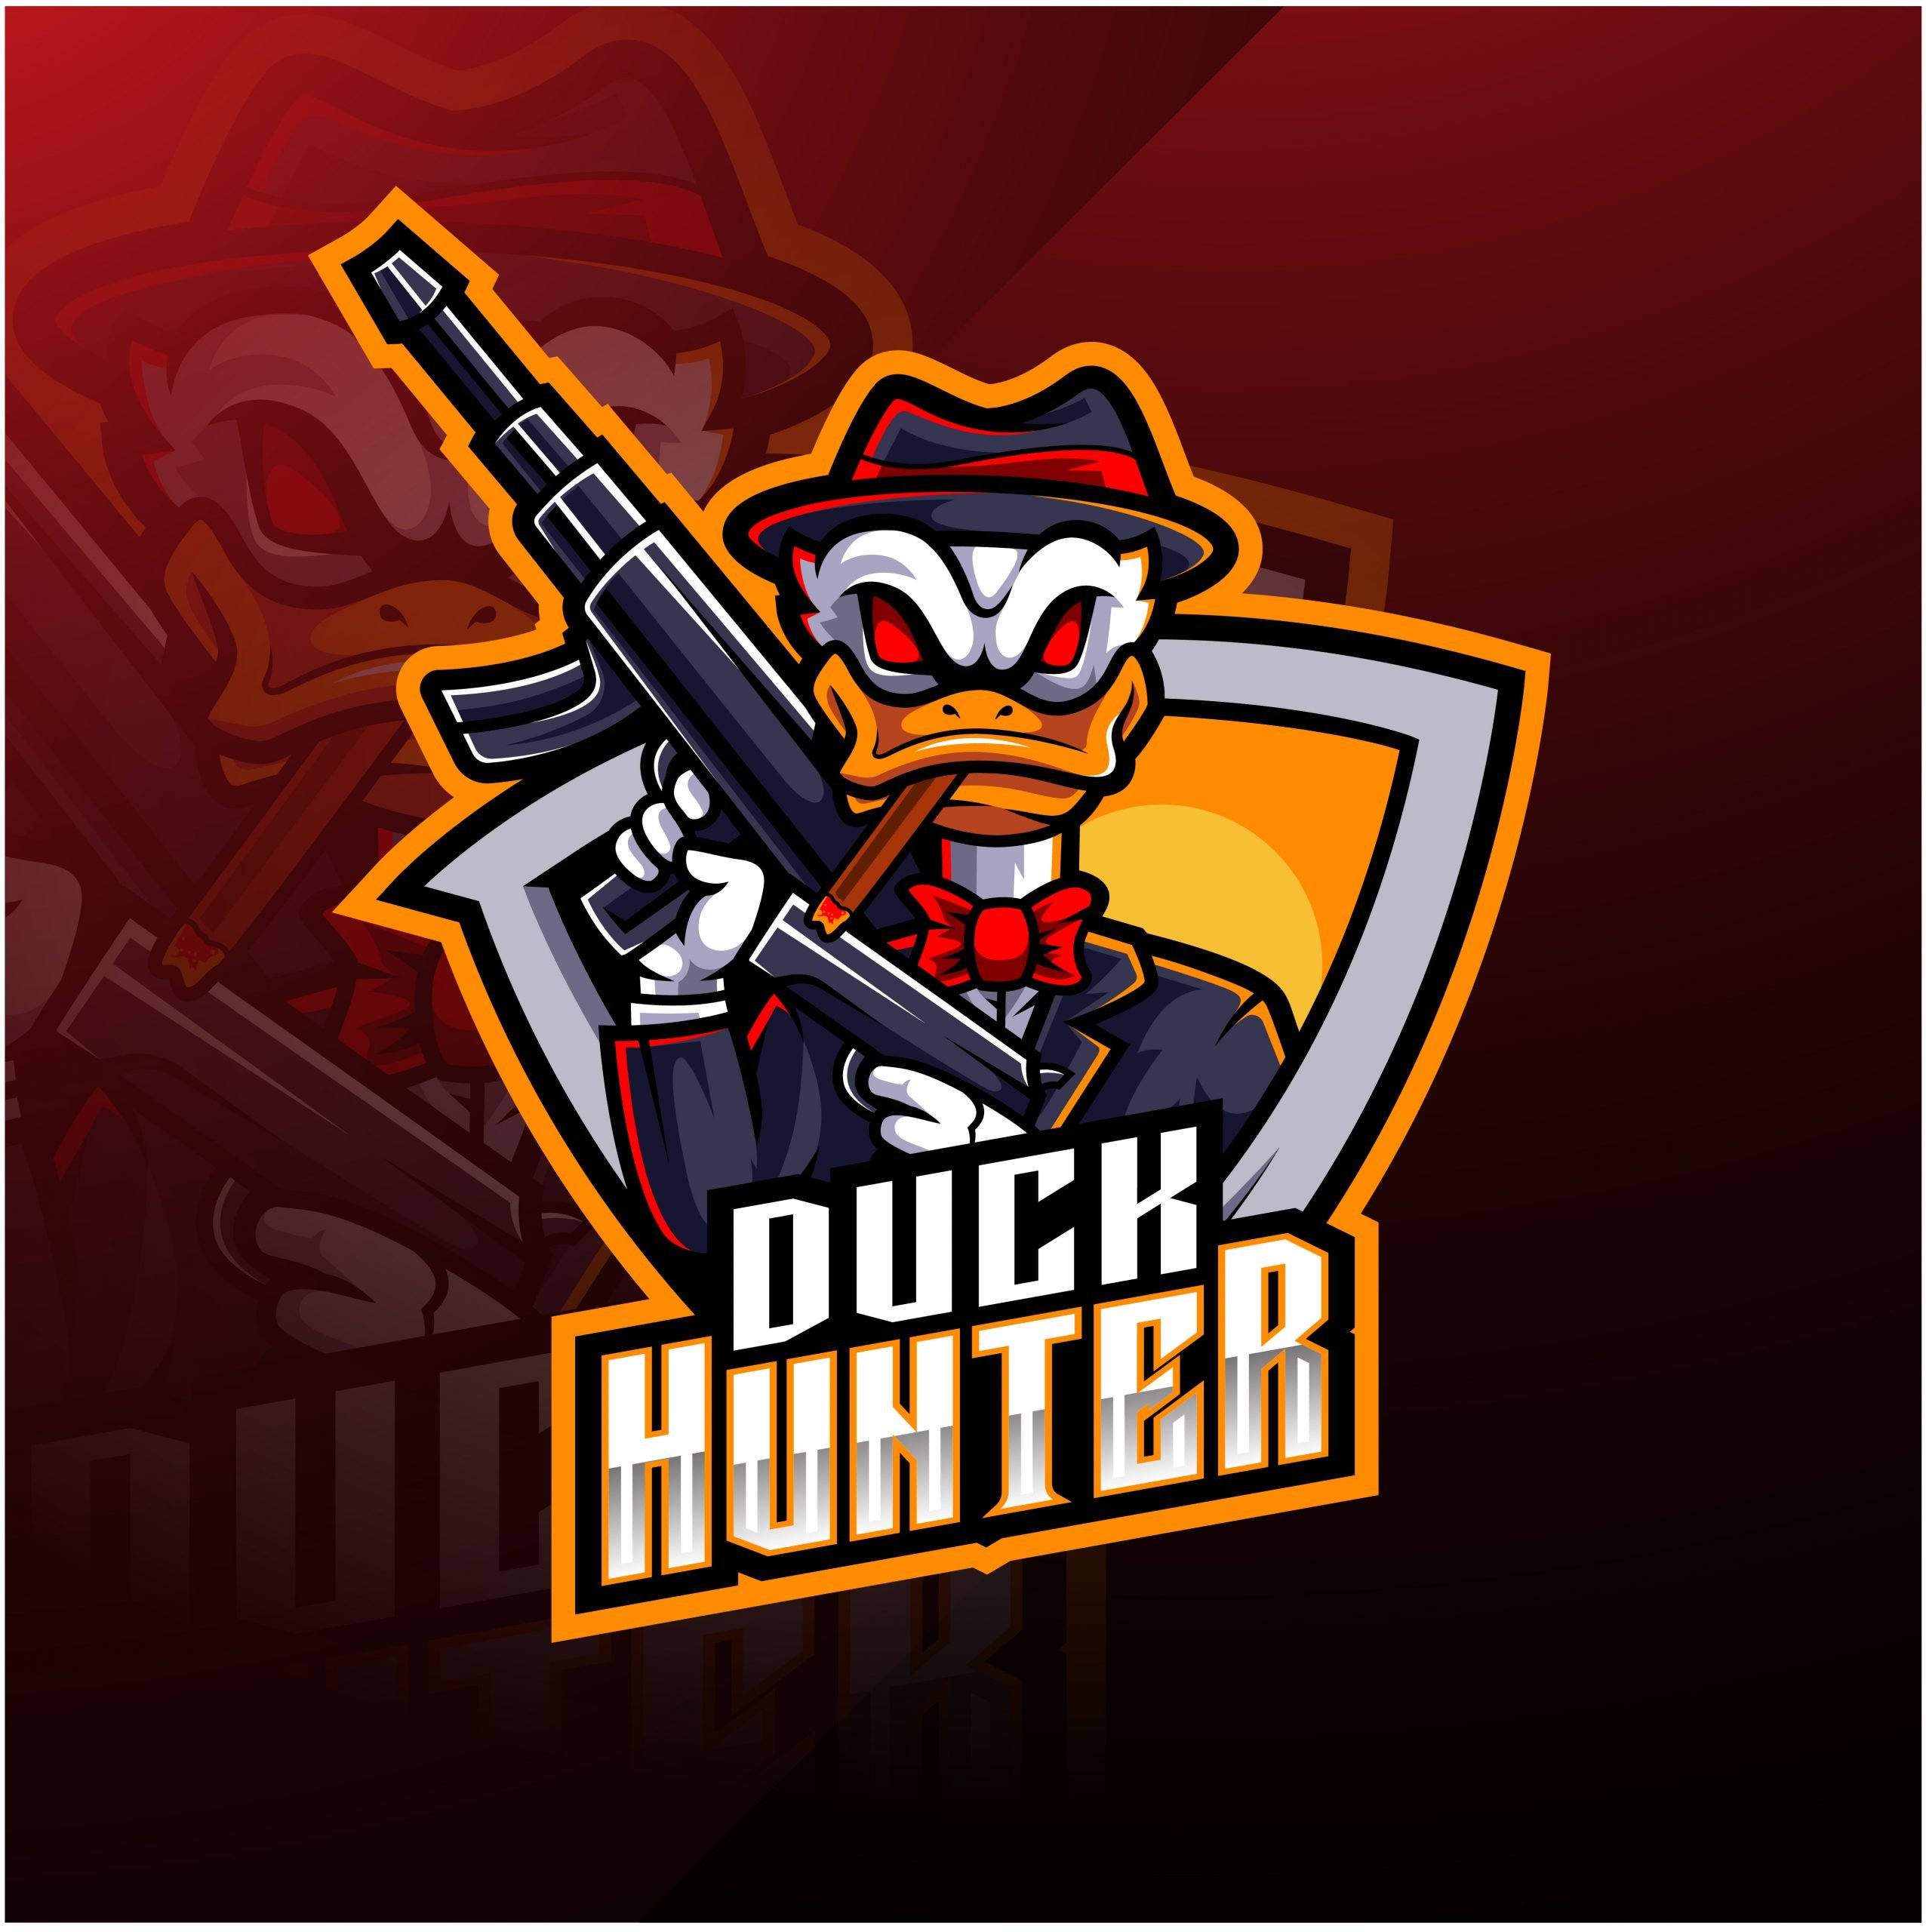 Duck gaming logo stock vector. Illustration of club - 199310015